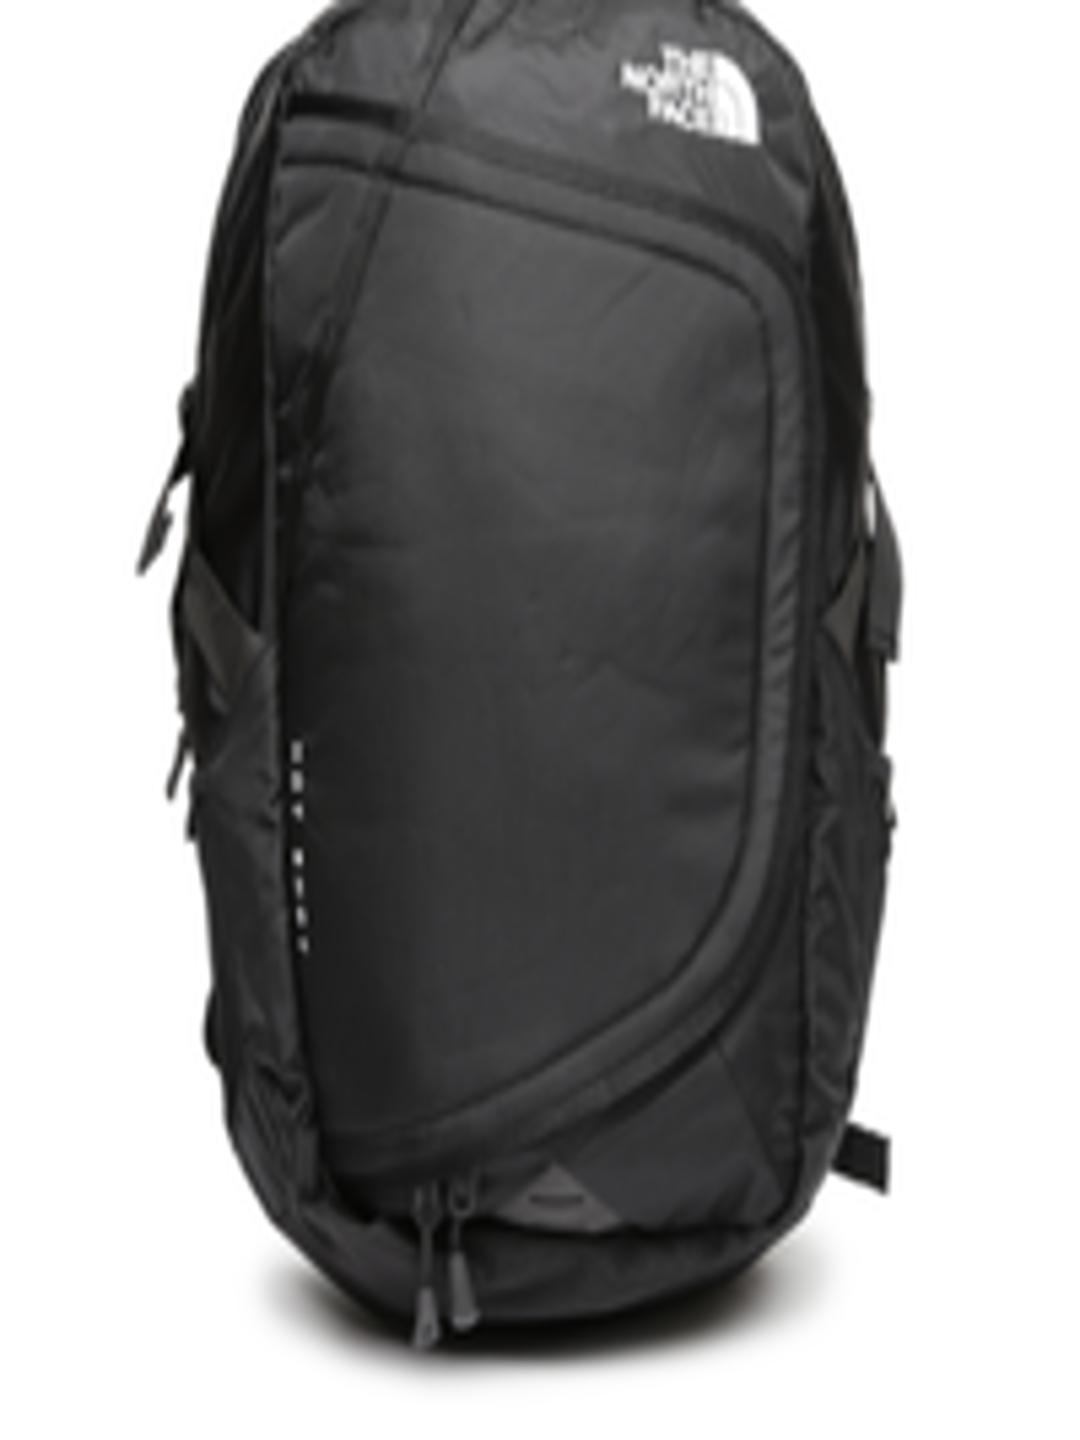 Buy The North Face Unisex Hot Shot Black Laptop Backpack - Backpacks